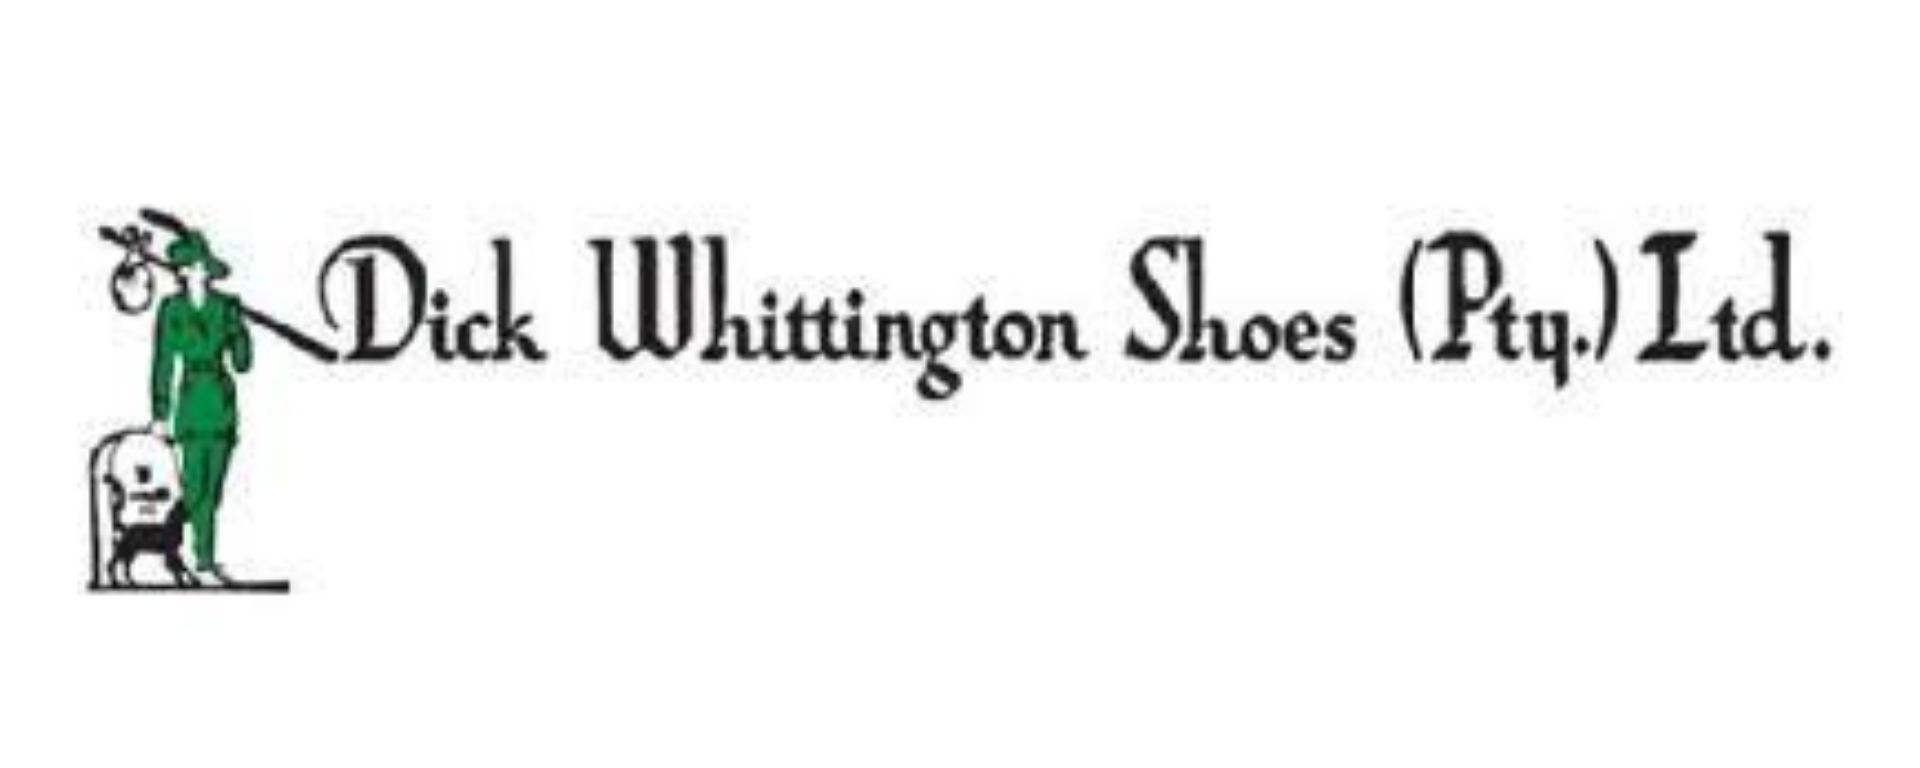 Dick Whittington Shoes